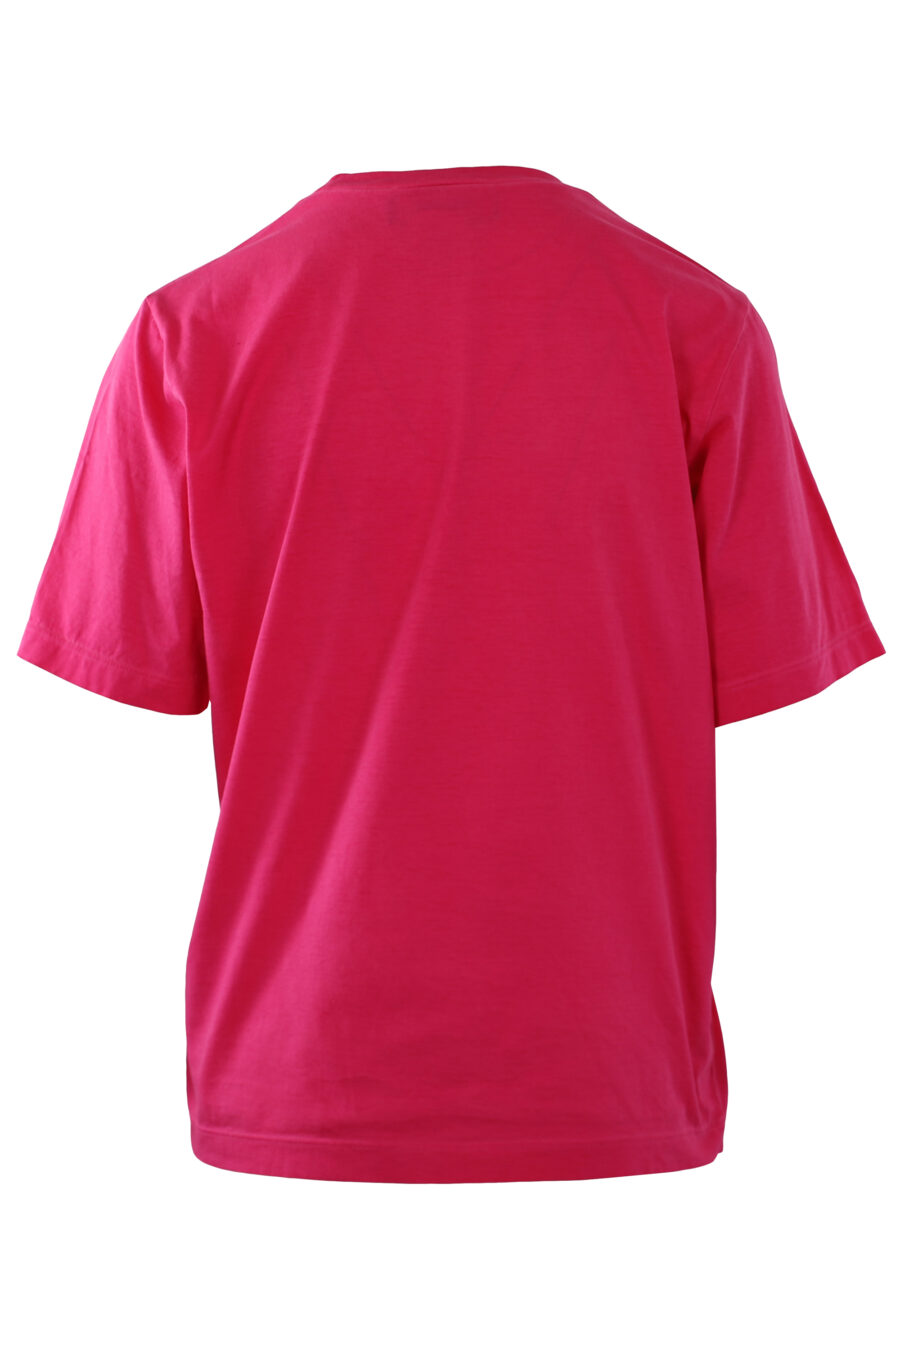 T-shirt fuchsia avec logo jaune - IMG 0241